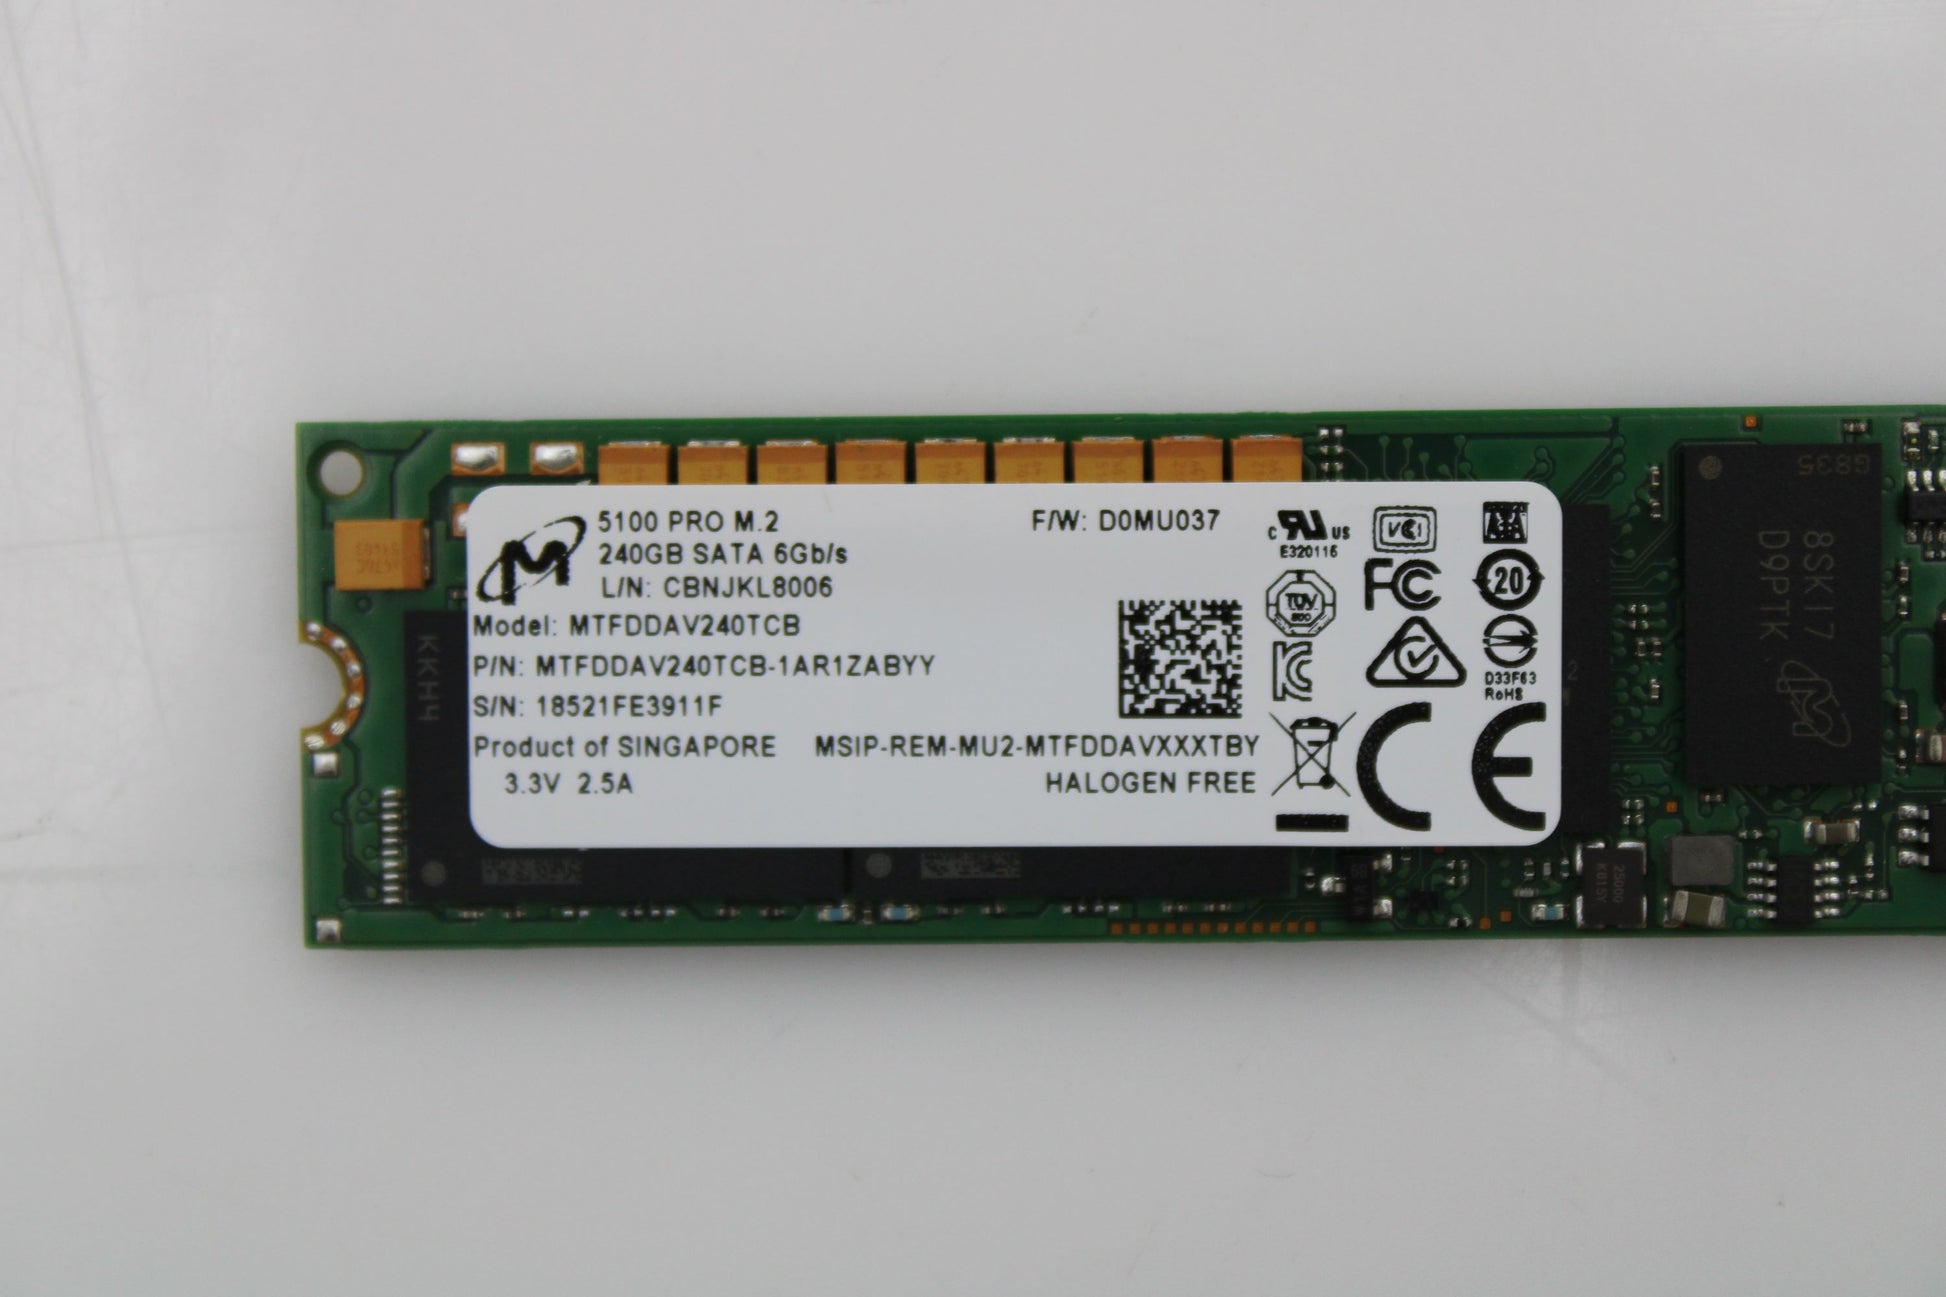 Micron MTFDDAV240TCB-1AR1ZA 240GB SSD Sata 6g m.2 5100 Pro, Used